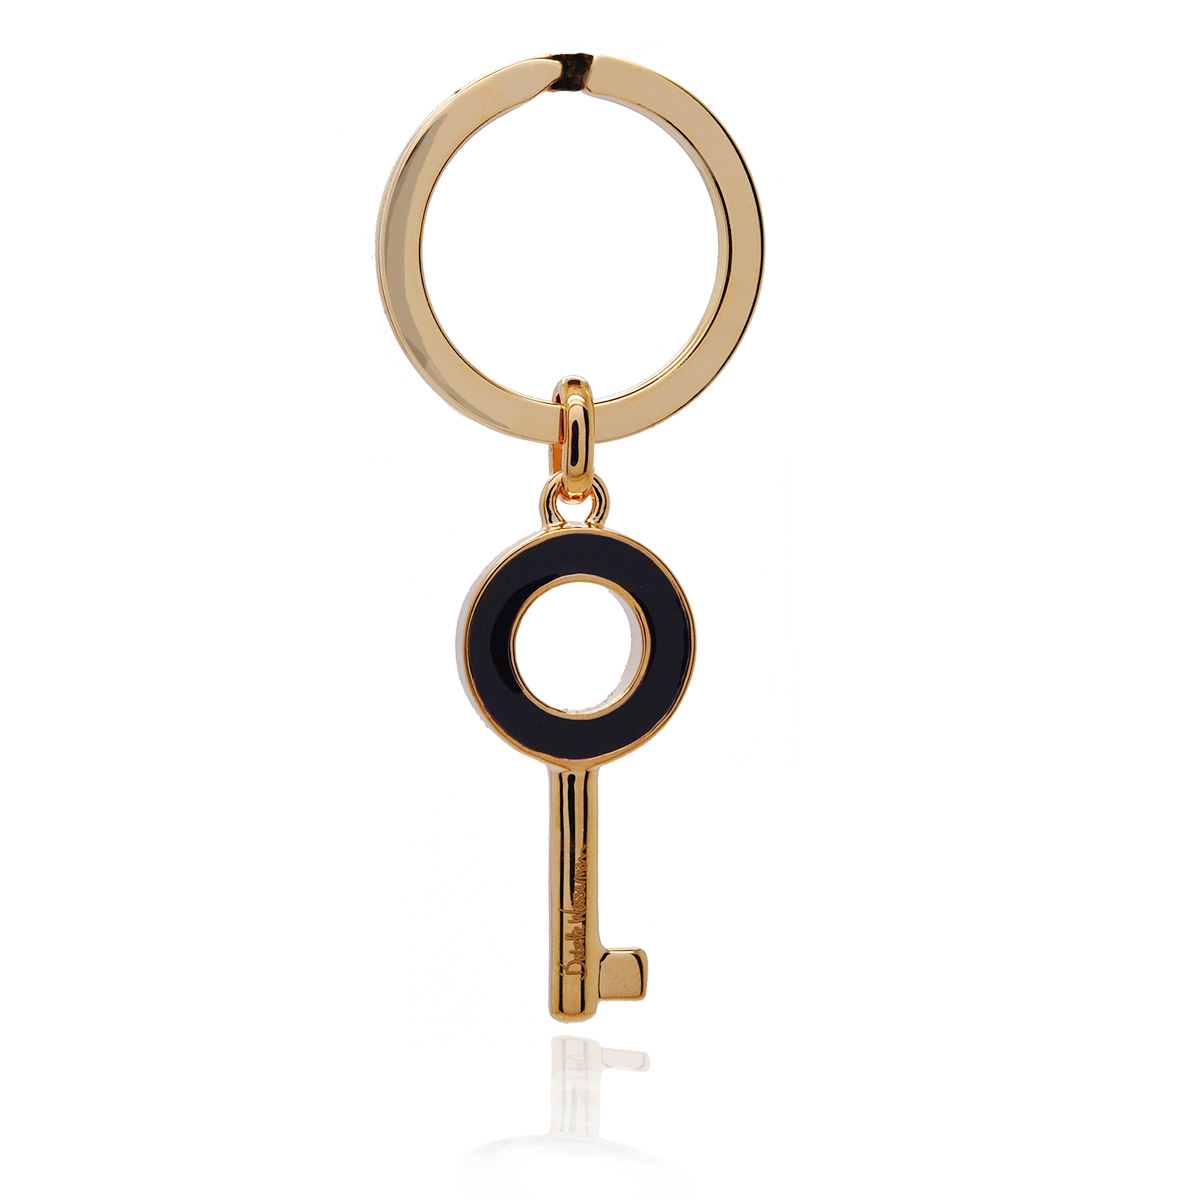 Designer Rose Gold Key Ring by Babette Wasserman - Cufflinks Depot